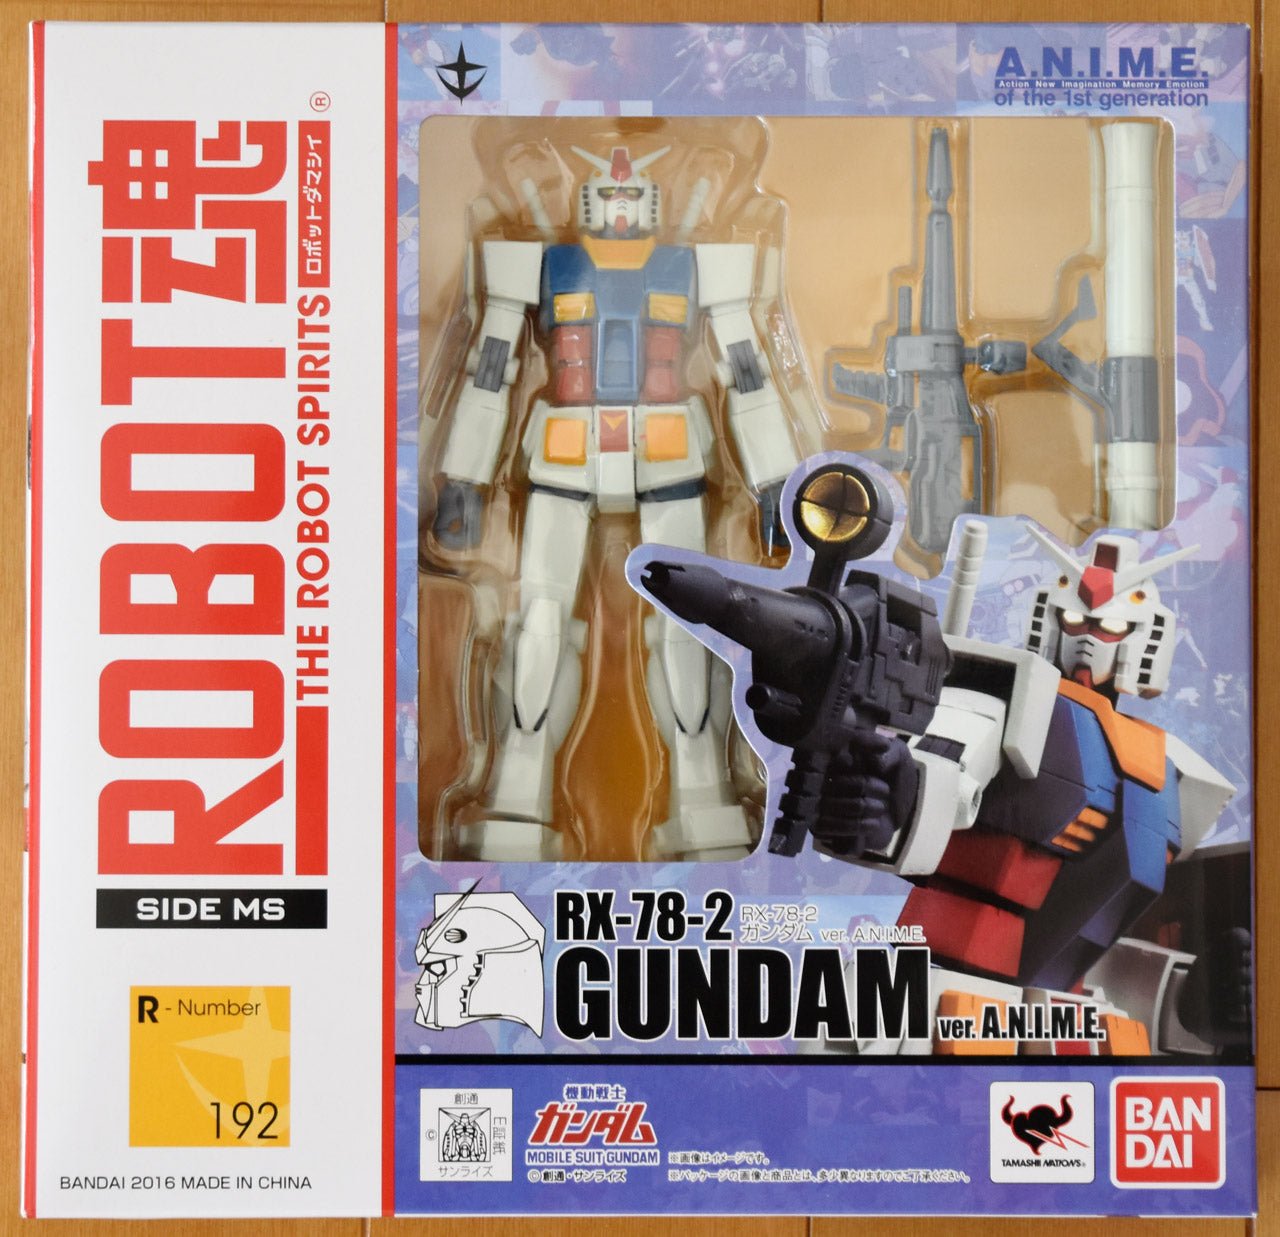 BANDAI 2321482 RX-78-2 GUNDAM ver. A.N.I.M.E. "Mobile Suit Gundam", Bandai Spirits THE ROBOT SPIRITS